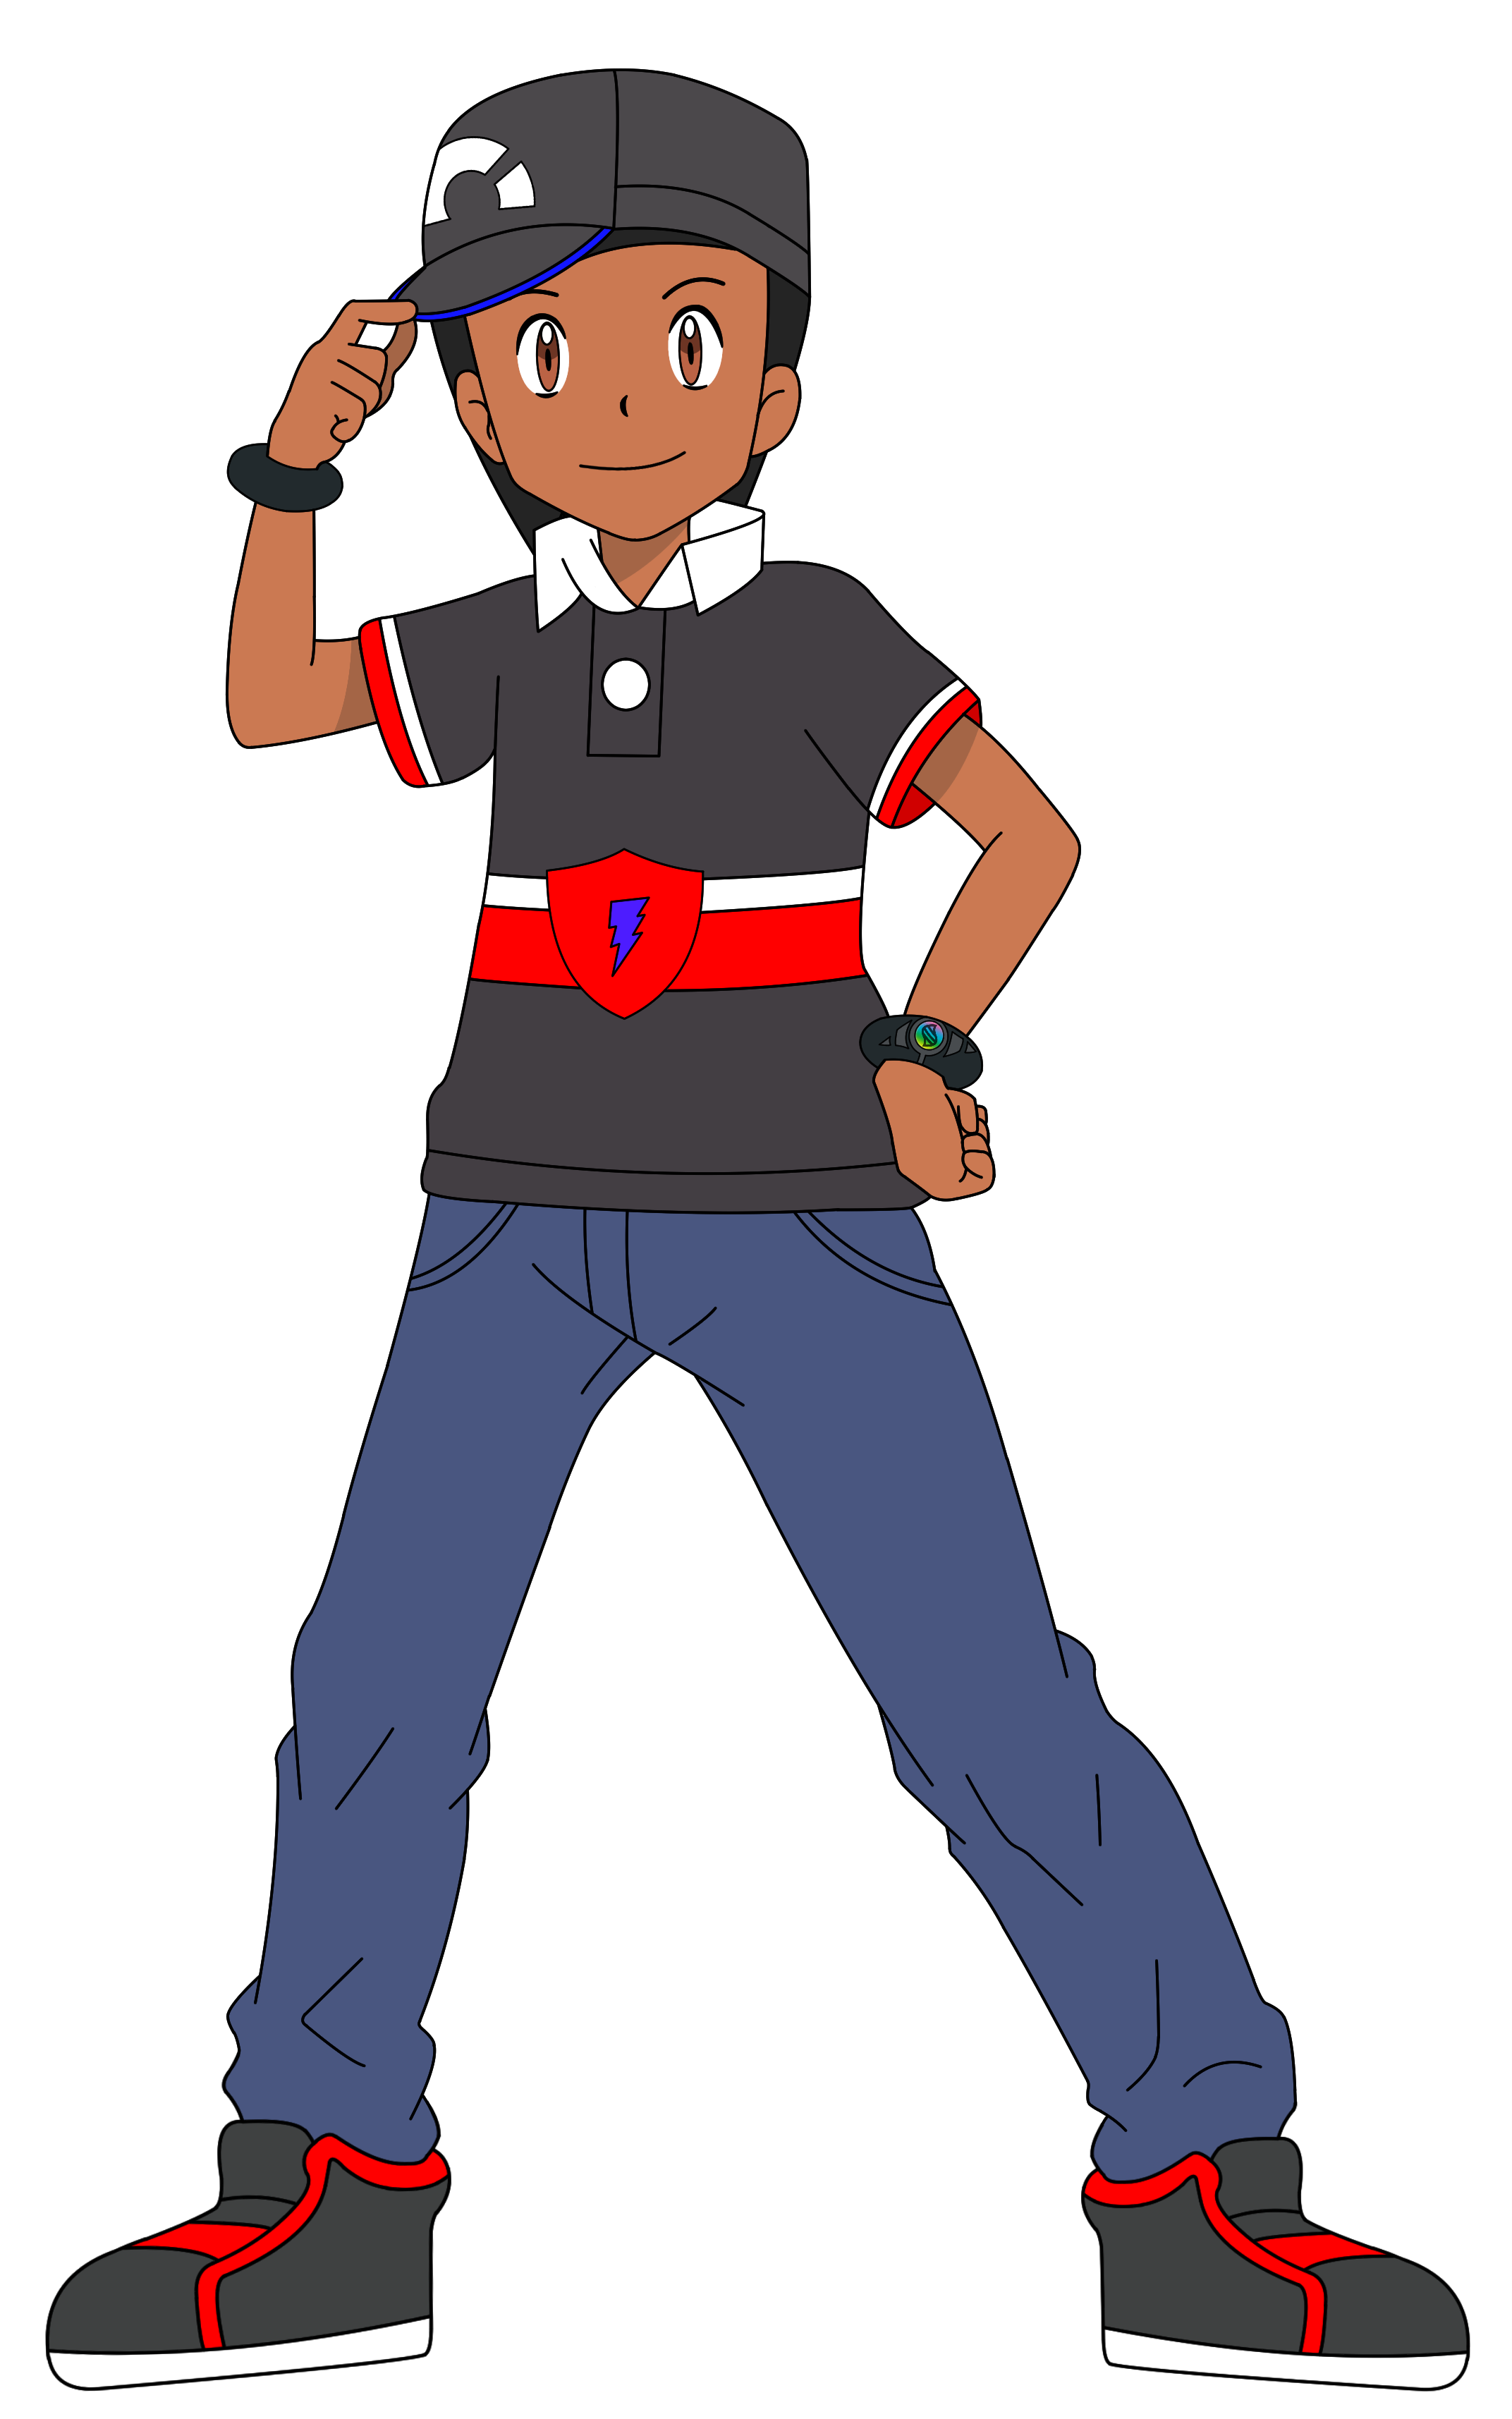 Pokemon Diamond Boy Protagonist in Gen. 3 Style. by RichardPT on DeviantArt